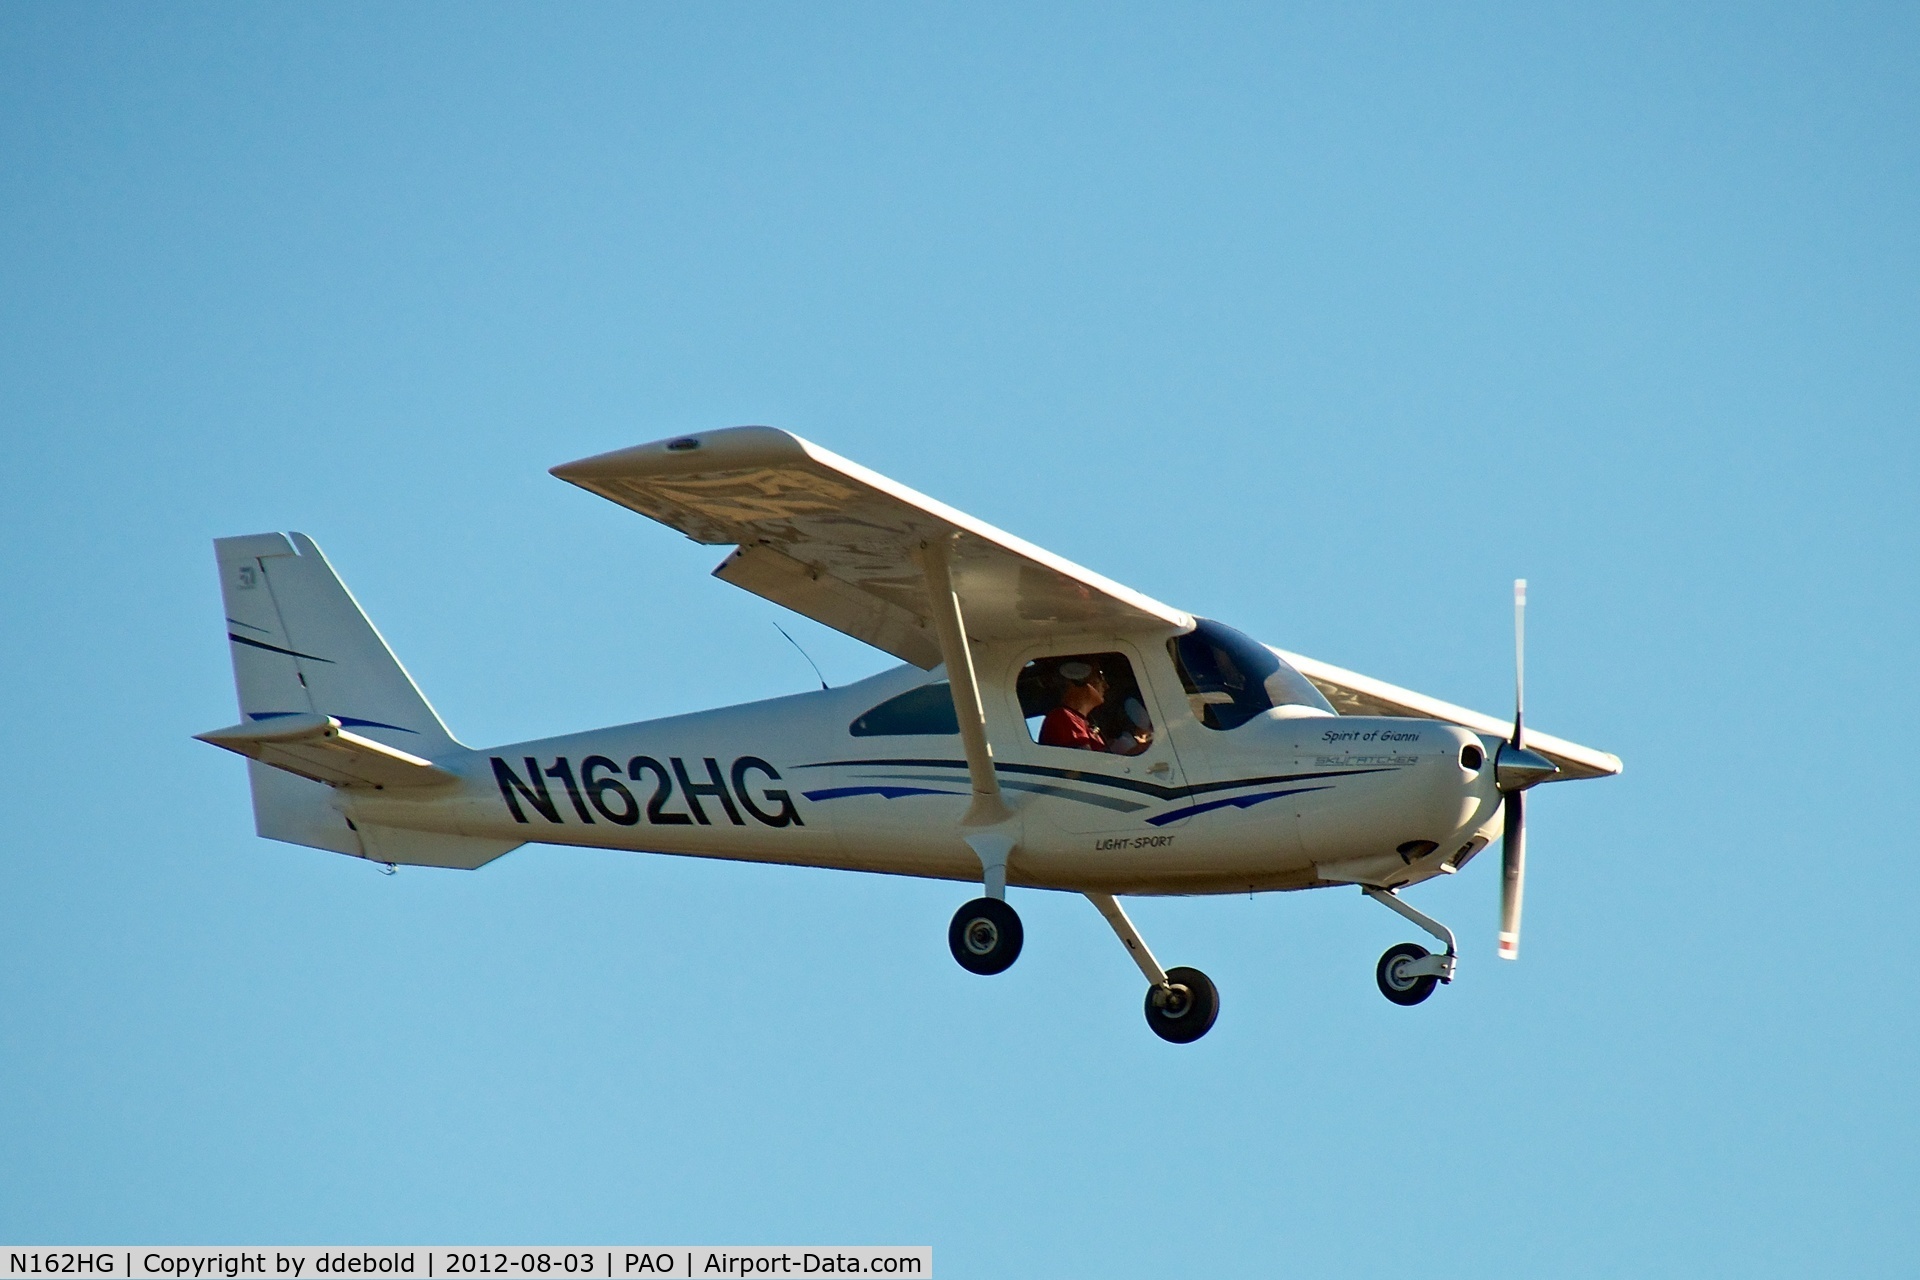 N162HG, 2011 Cessna 162 Skycatcher C/N 16200060, N162HG approaching Palo Alto Airport